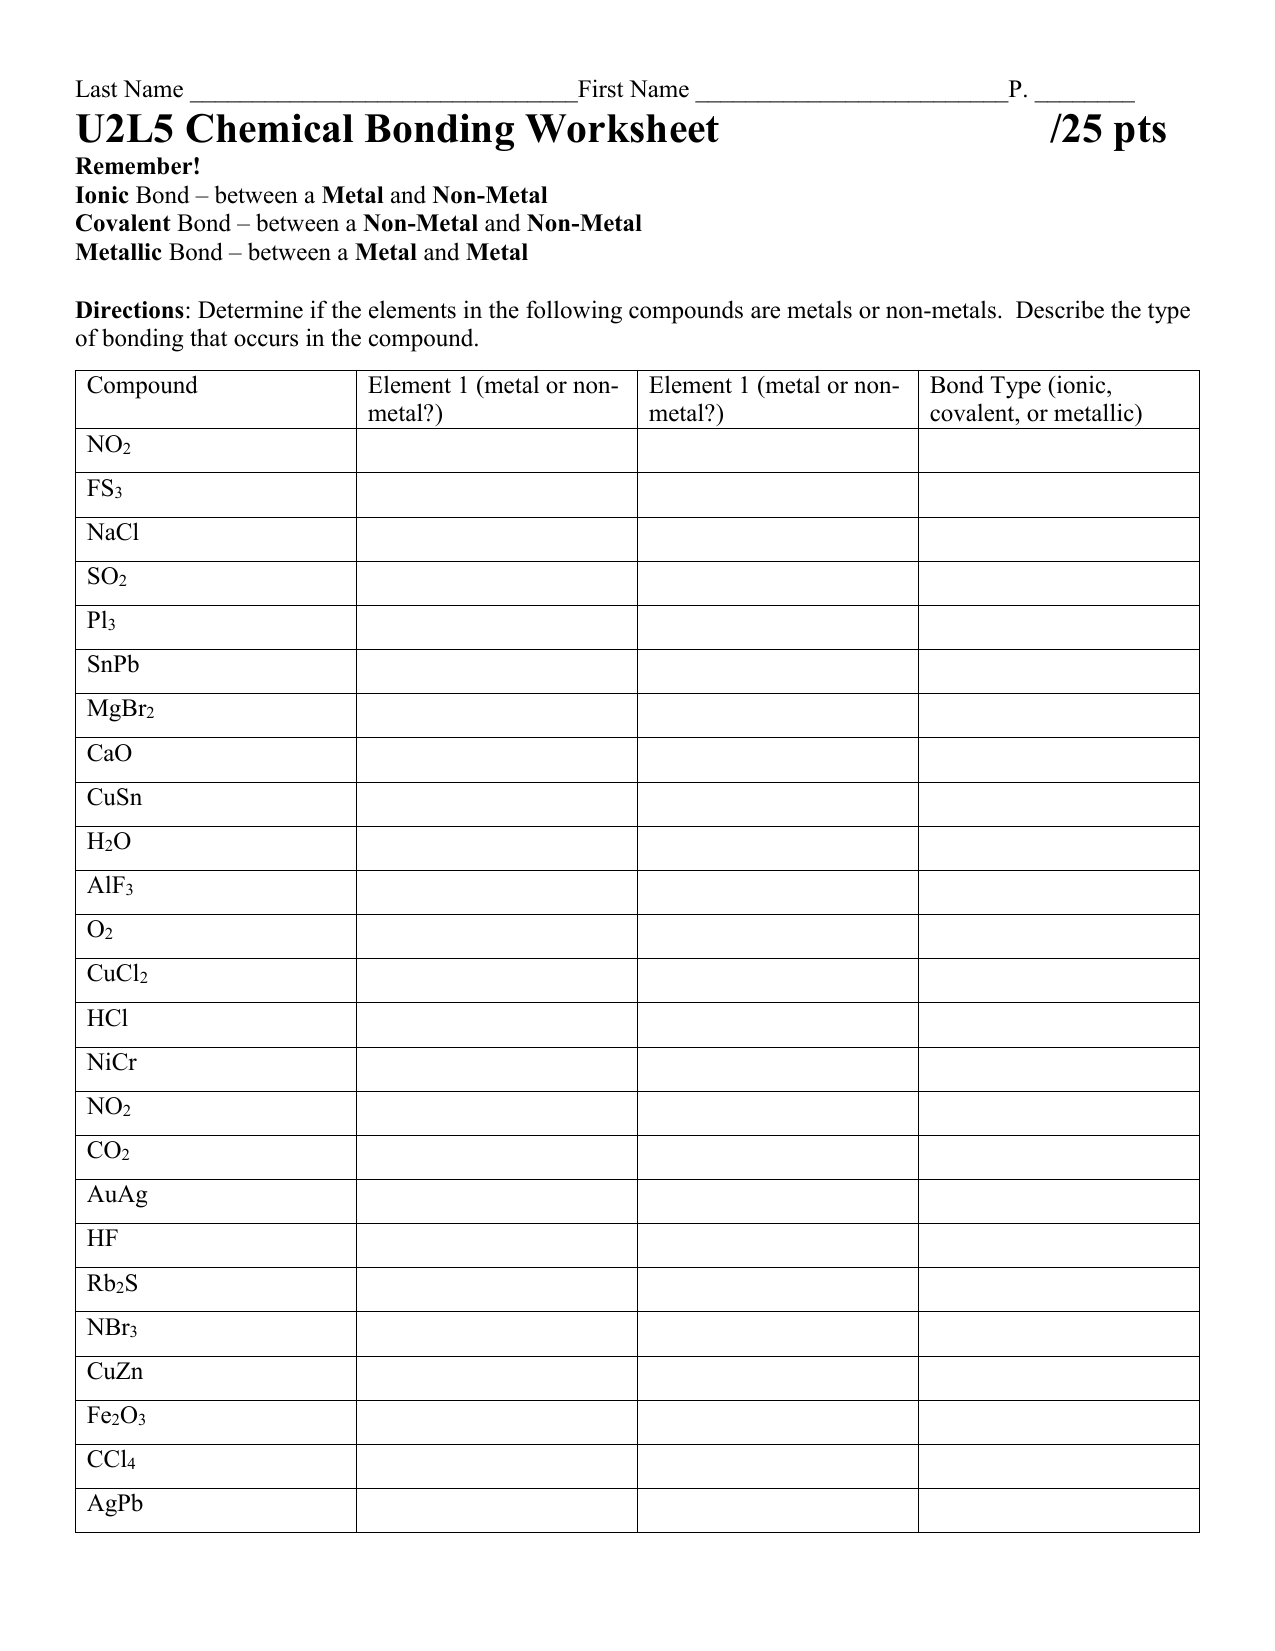 U22L22 Chemical Bonding Worksheet Regarding Chemical Bonding Worksheet Answers